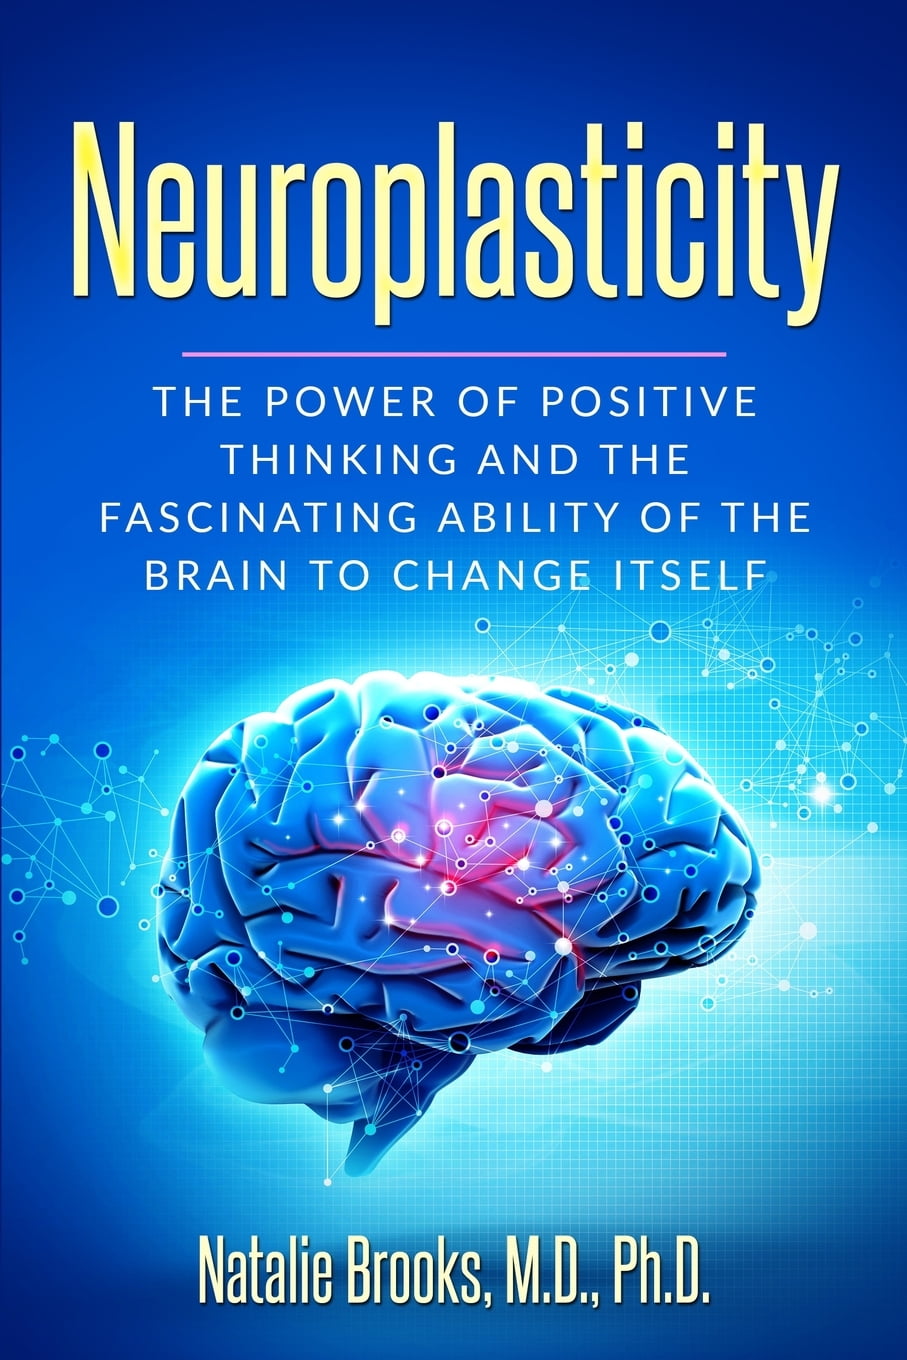 research topics on neuroplasticity